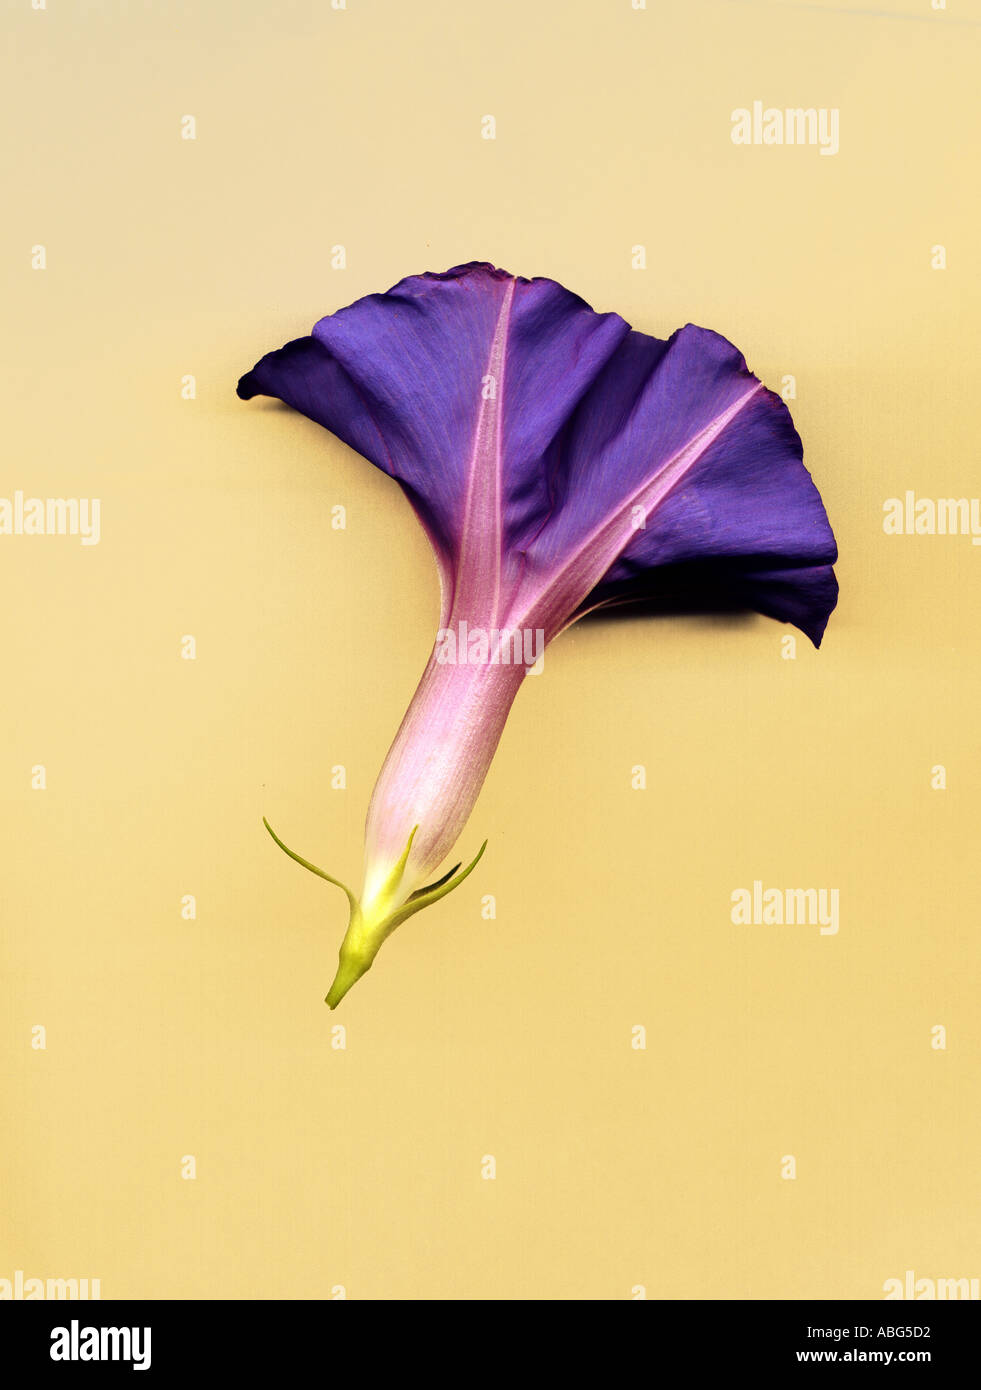 Purple morning glory flower on yellow background Stock Photo